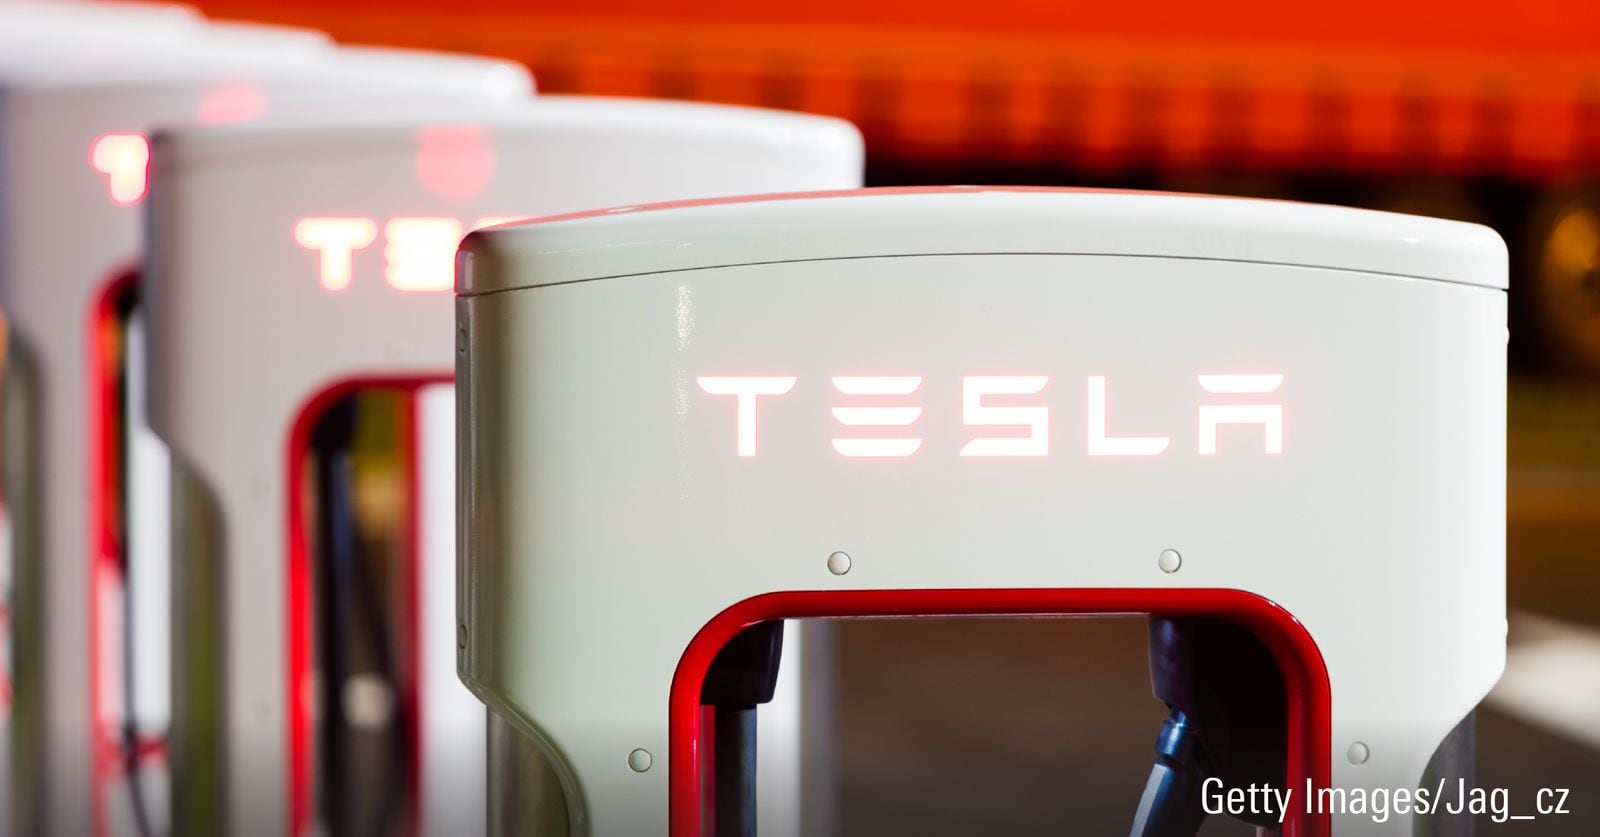 Tesla stock story ahead of company earnings. Image of a Tesla Supercharger.